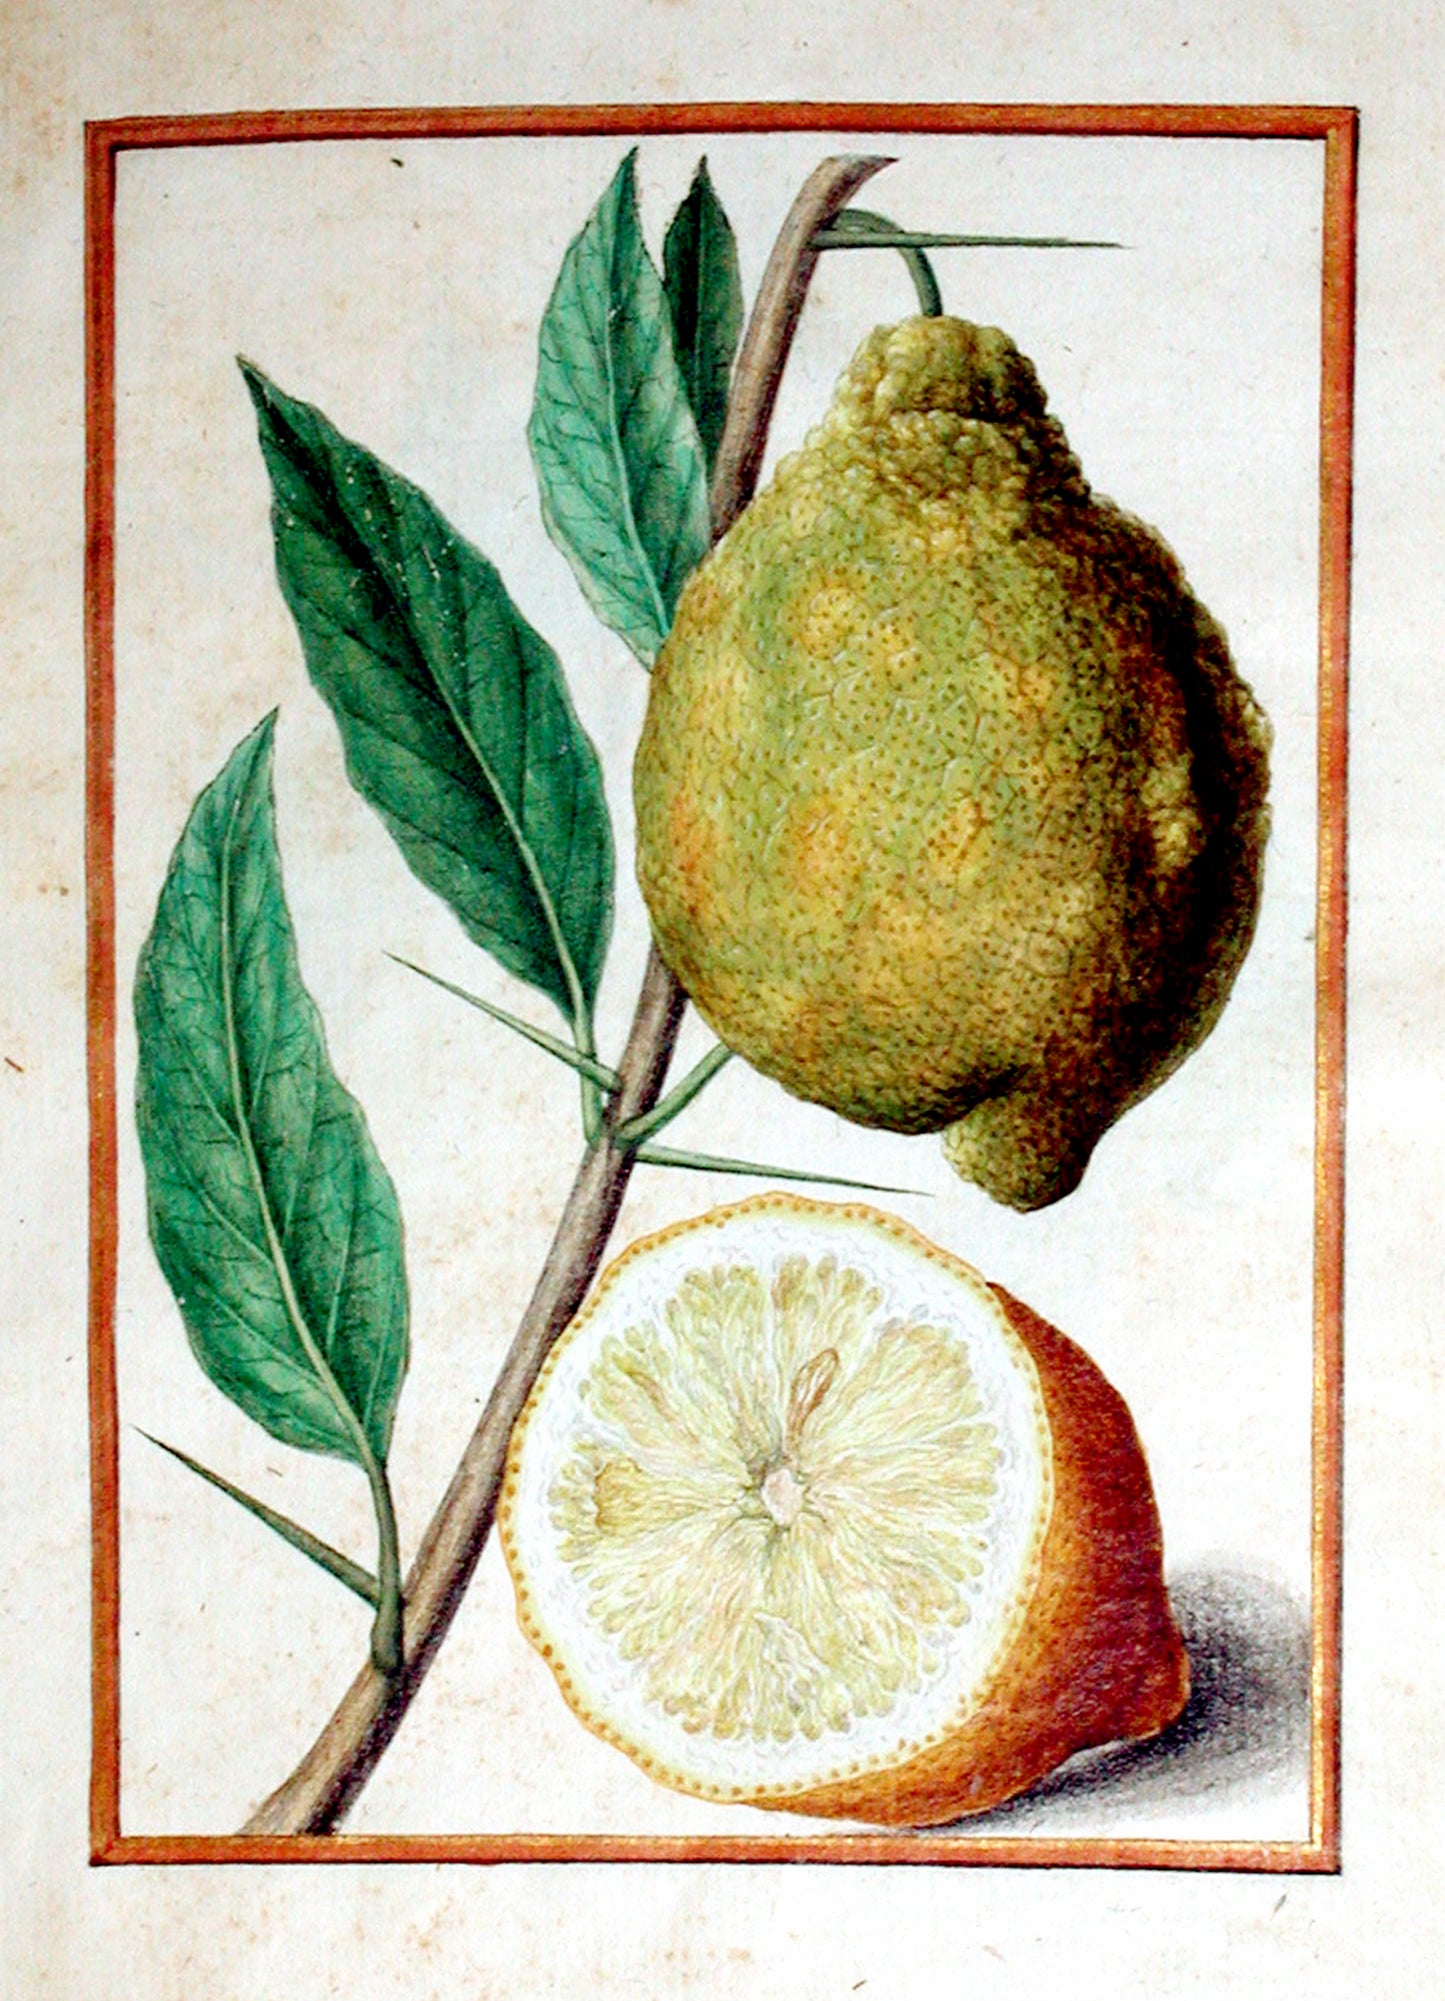 JACQUES LE MOYNE DE MORGUES (FRENCH, CA. 1533-1588) f.79: Lemon Watercolor and gouache on paper prepared as vellum